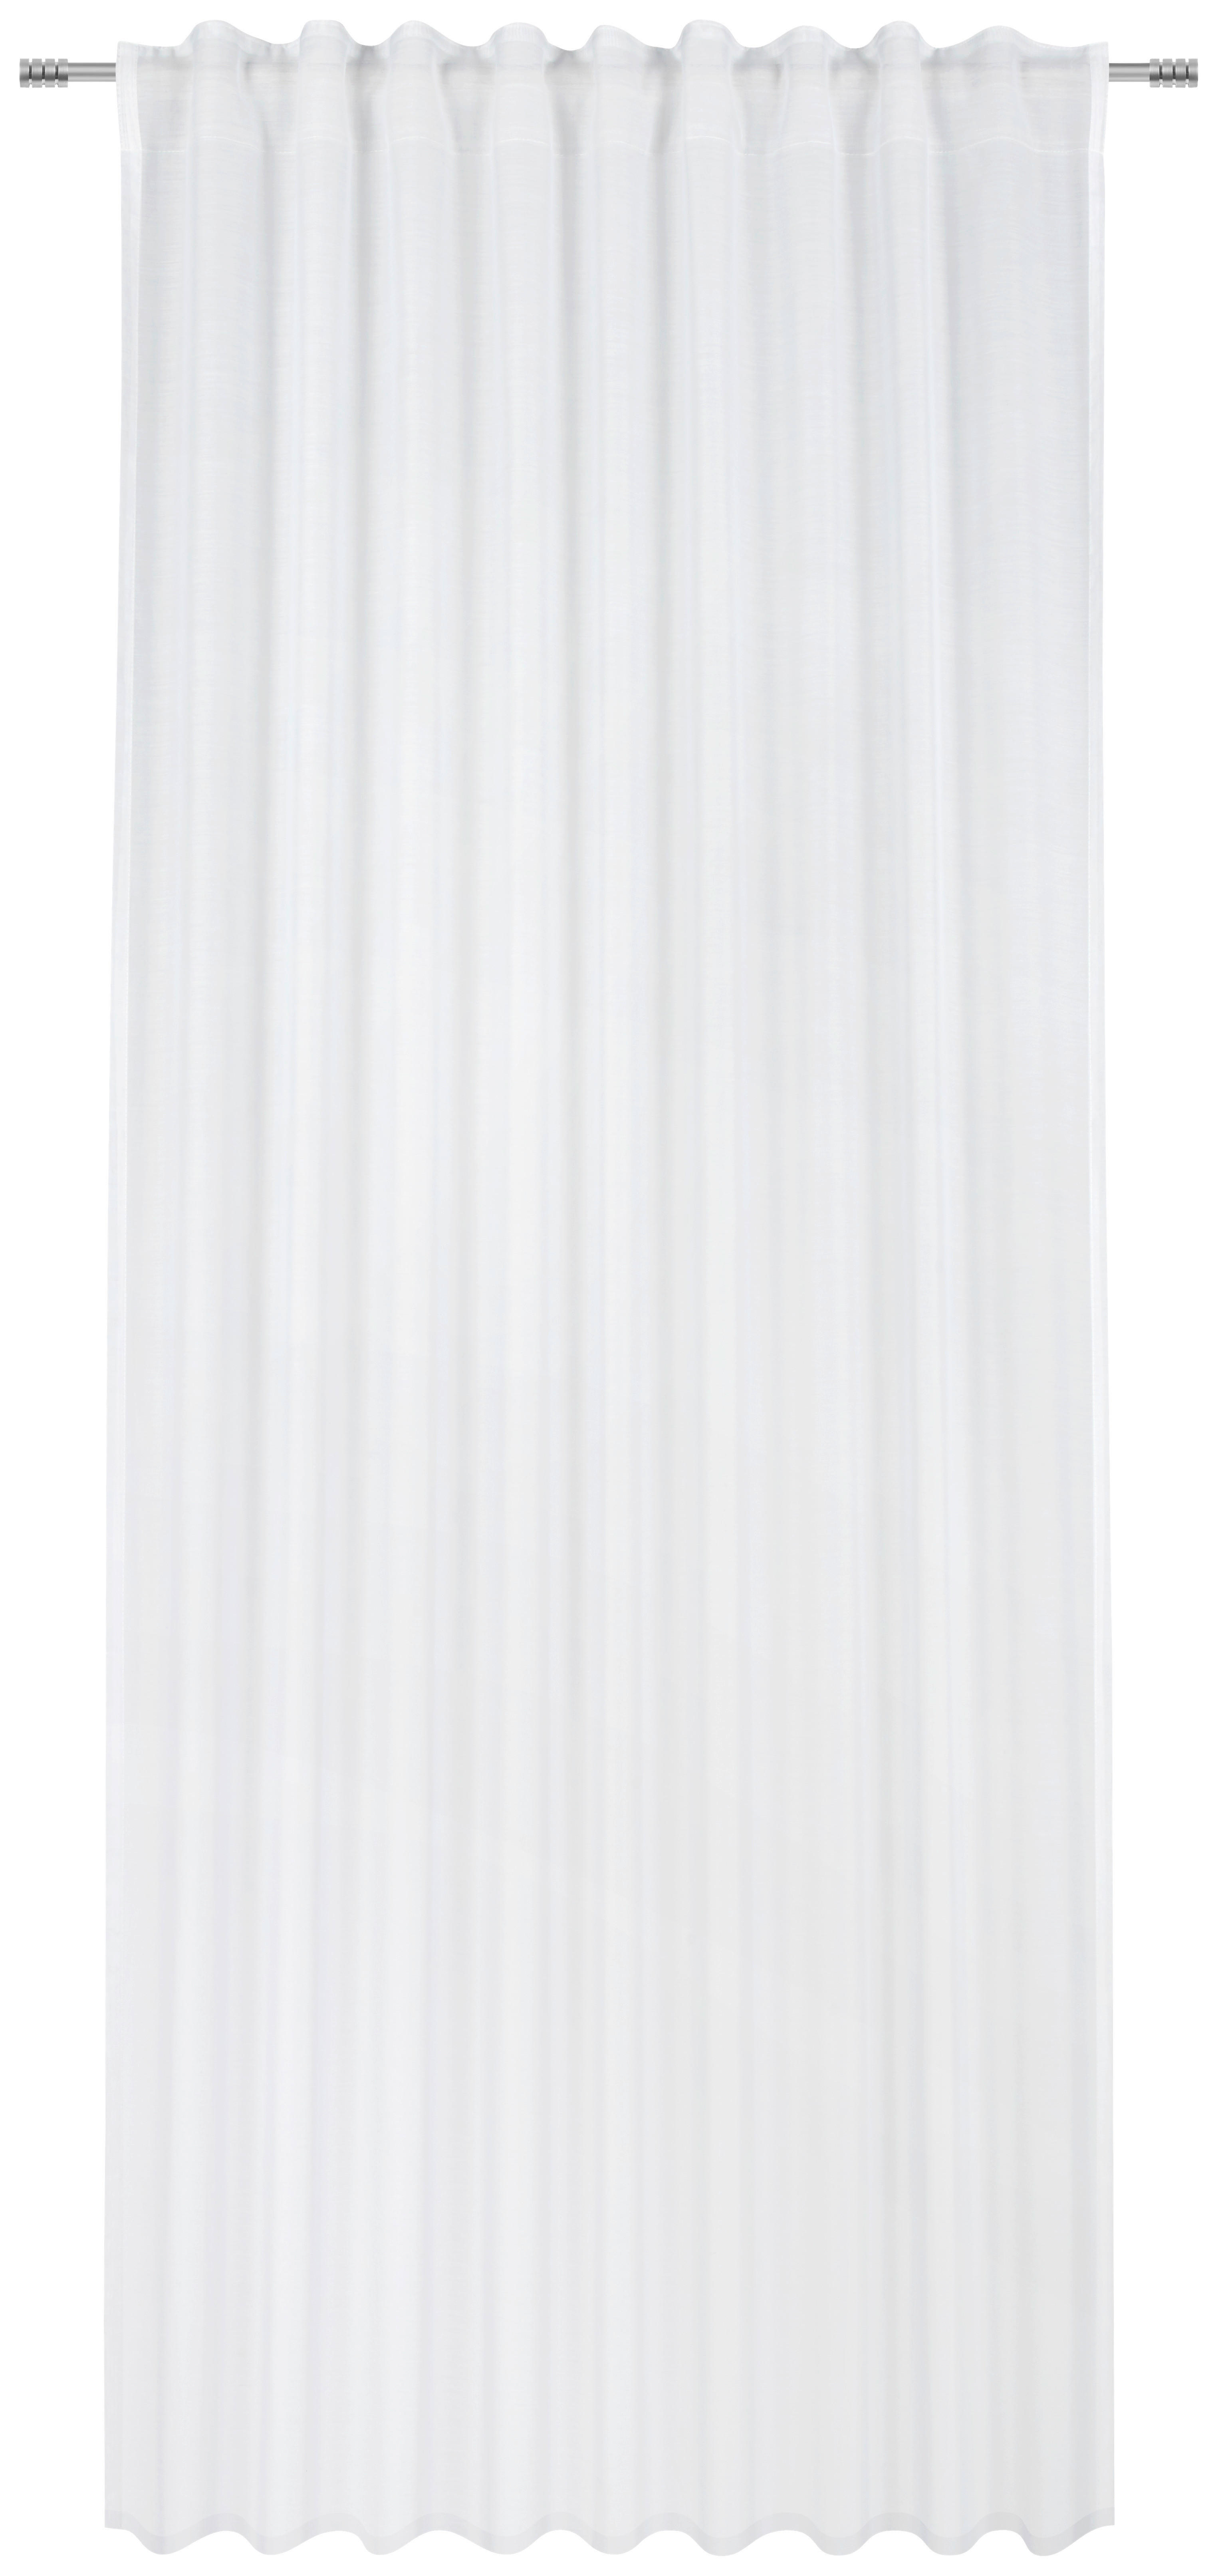 FERTIGVORHANG transparent  - weiss, Konventionell, Textil (140/245cm) - Esposa